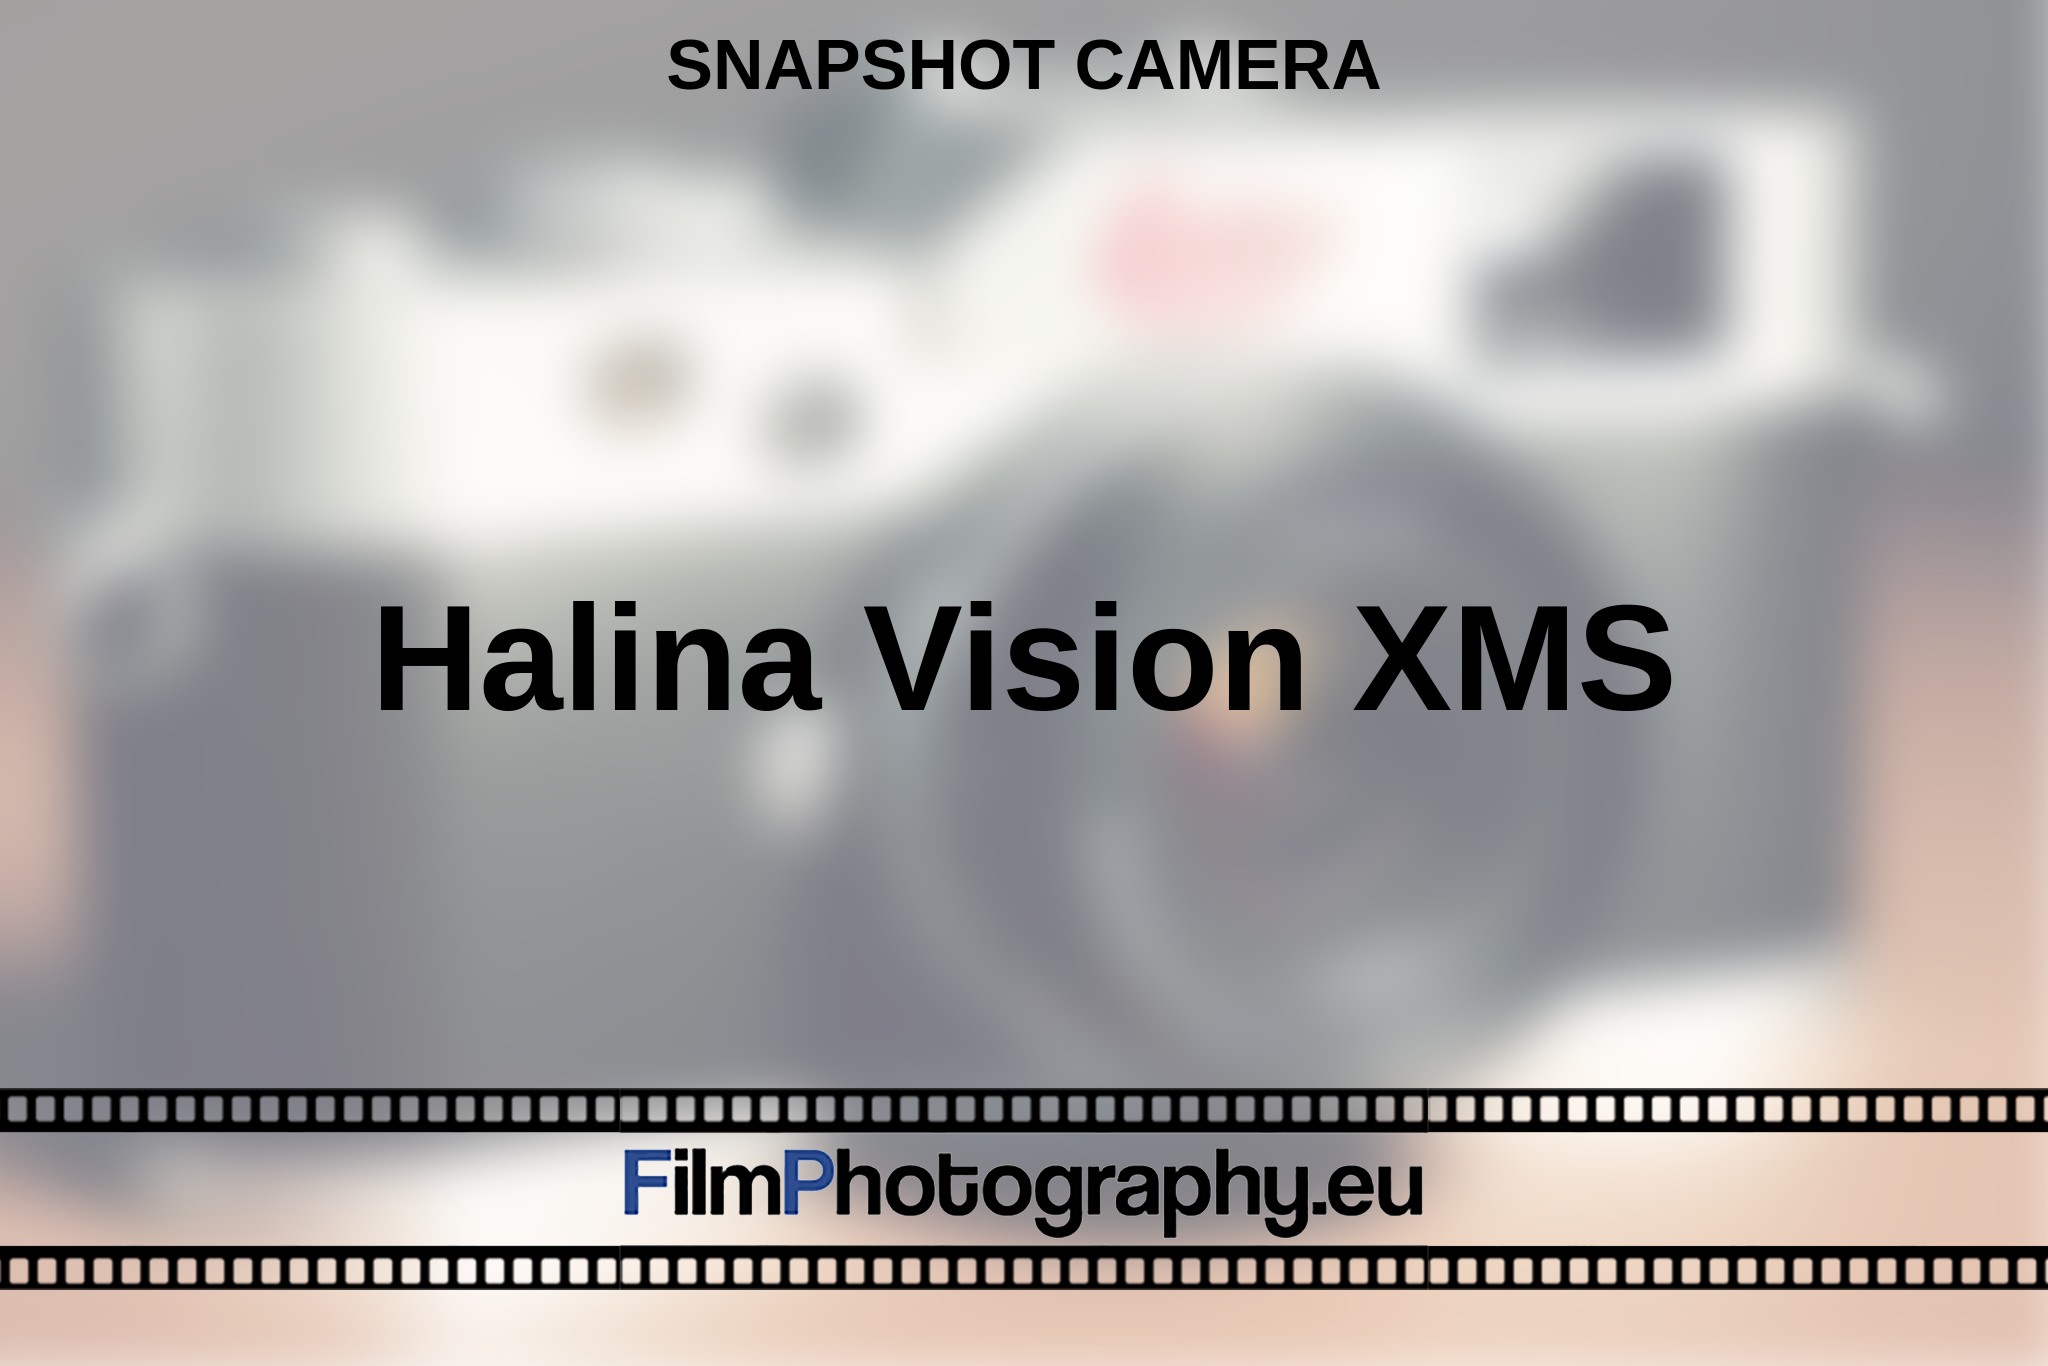 halina-vision-xms-snapshot-camera-en-bnv.jpg